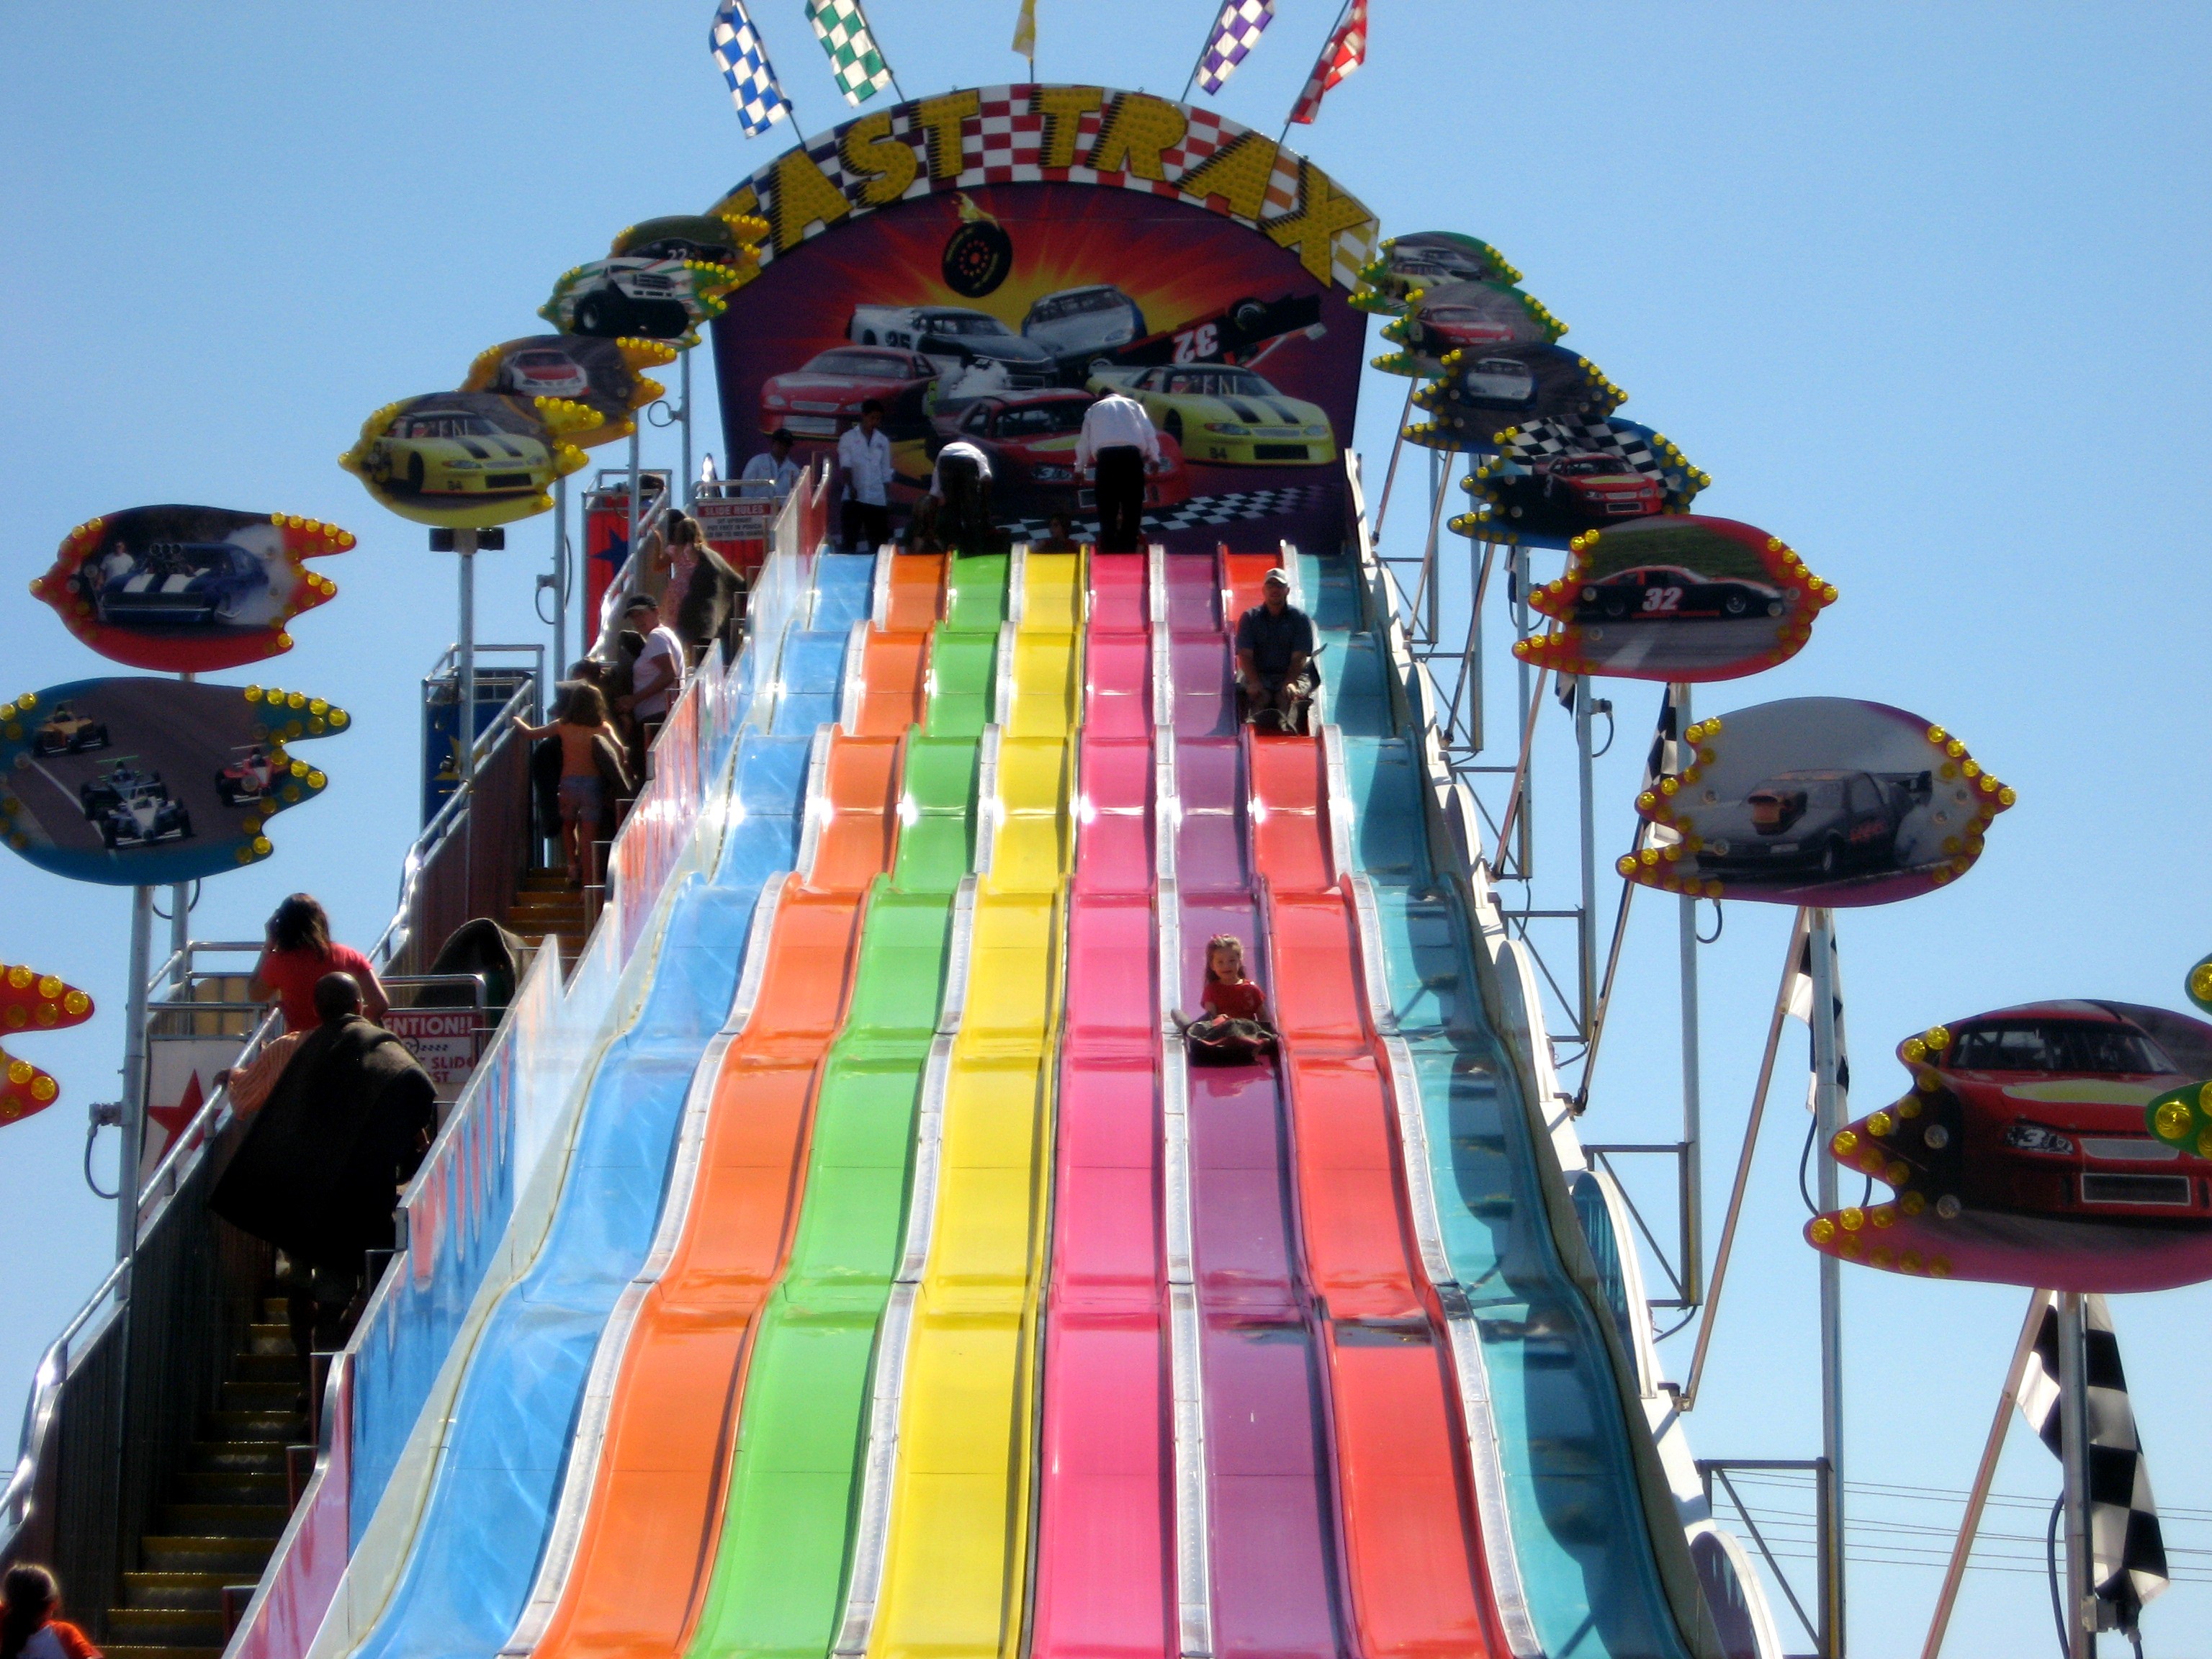 Super Slide at the Texas State Fair